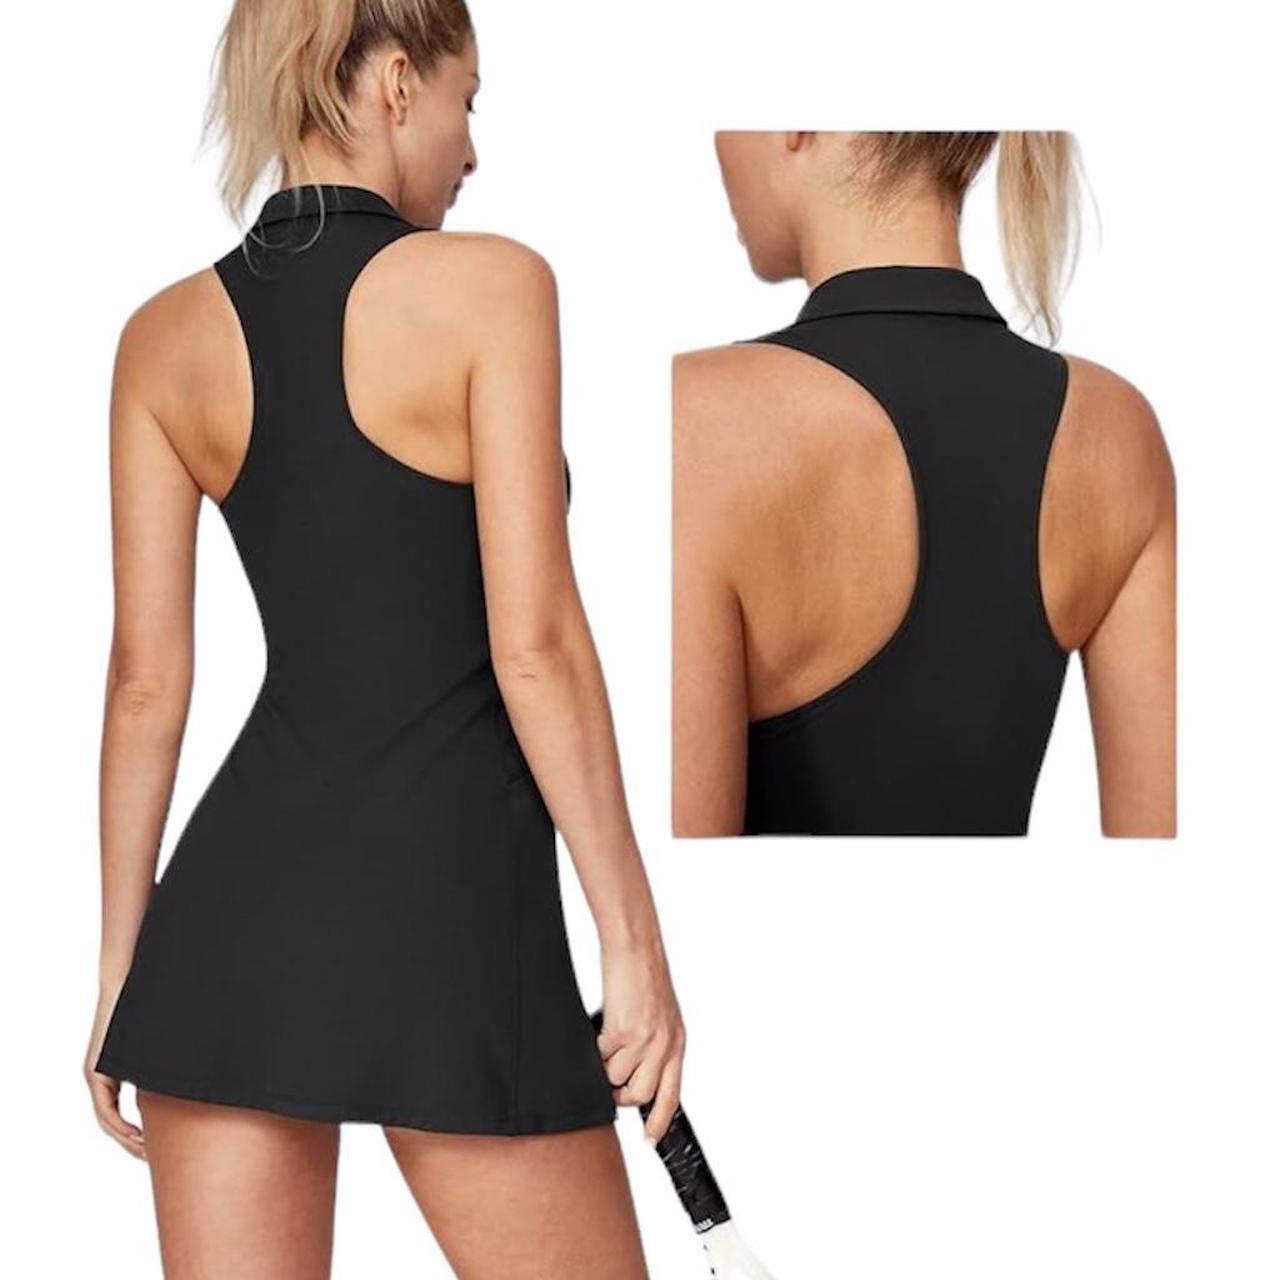  IUGA Womens Tennis Dress Built in Shorts & Bra